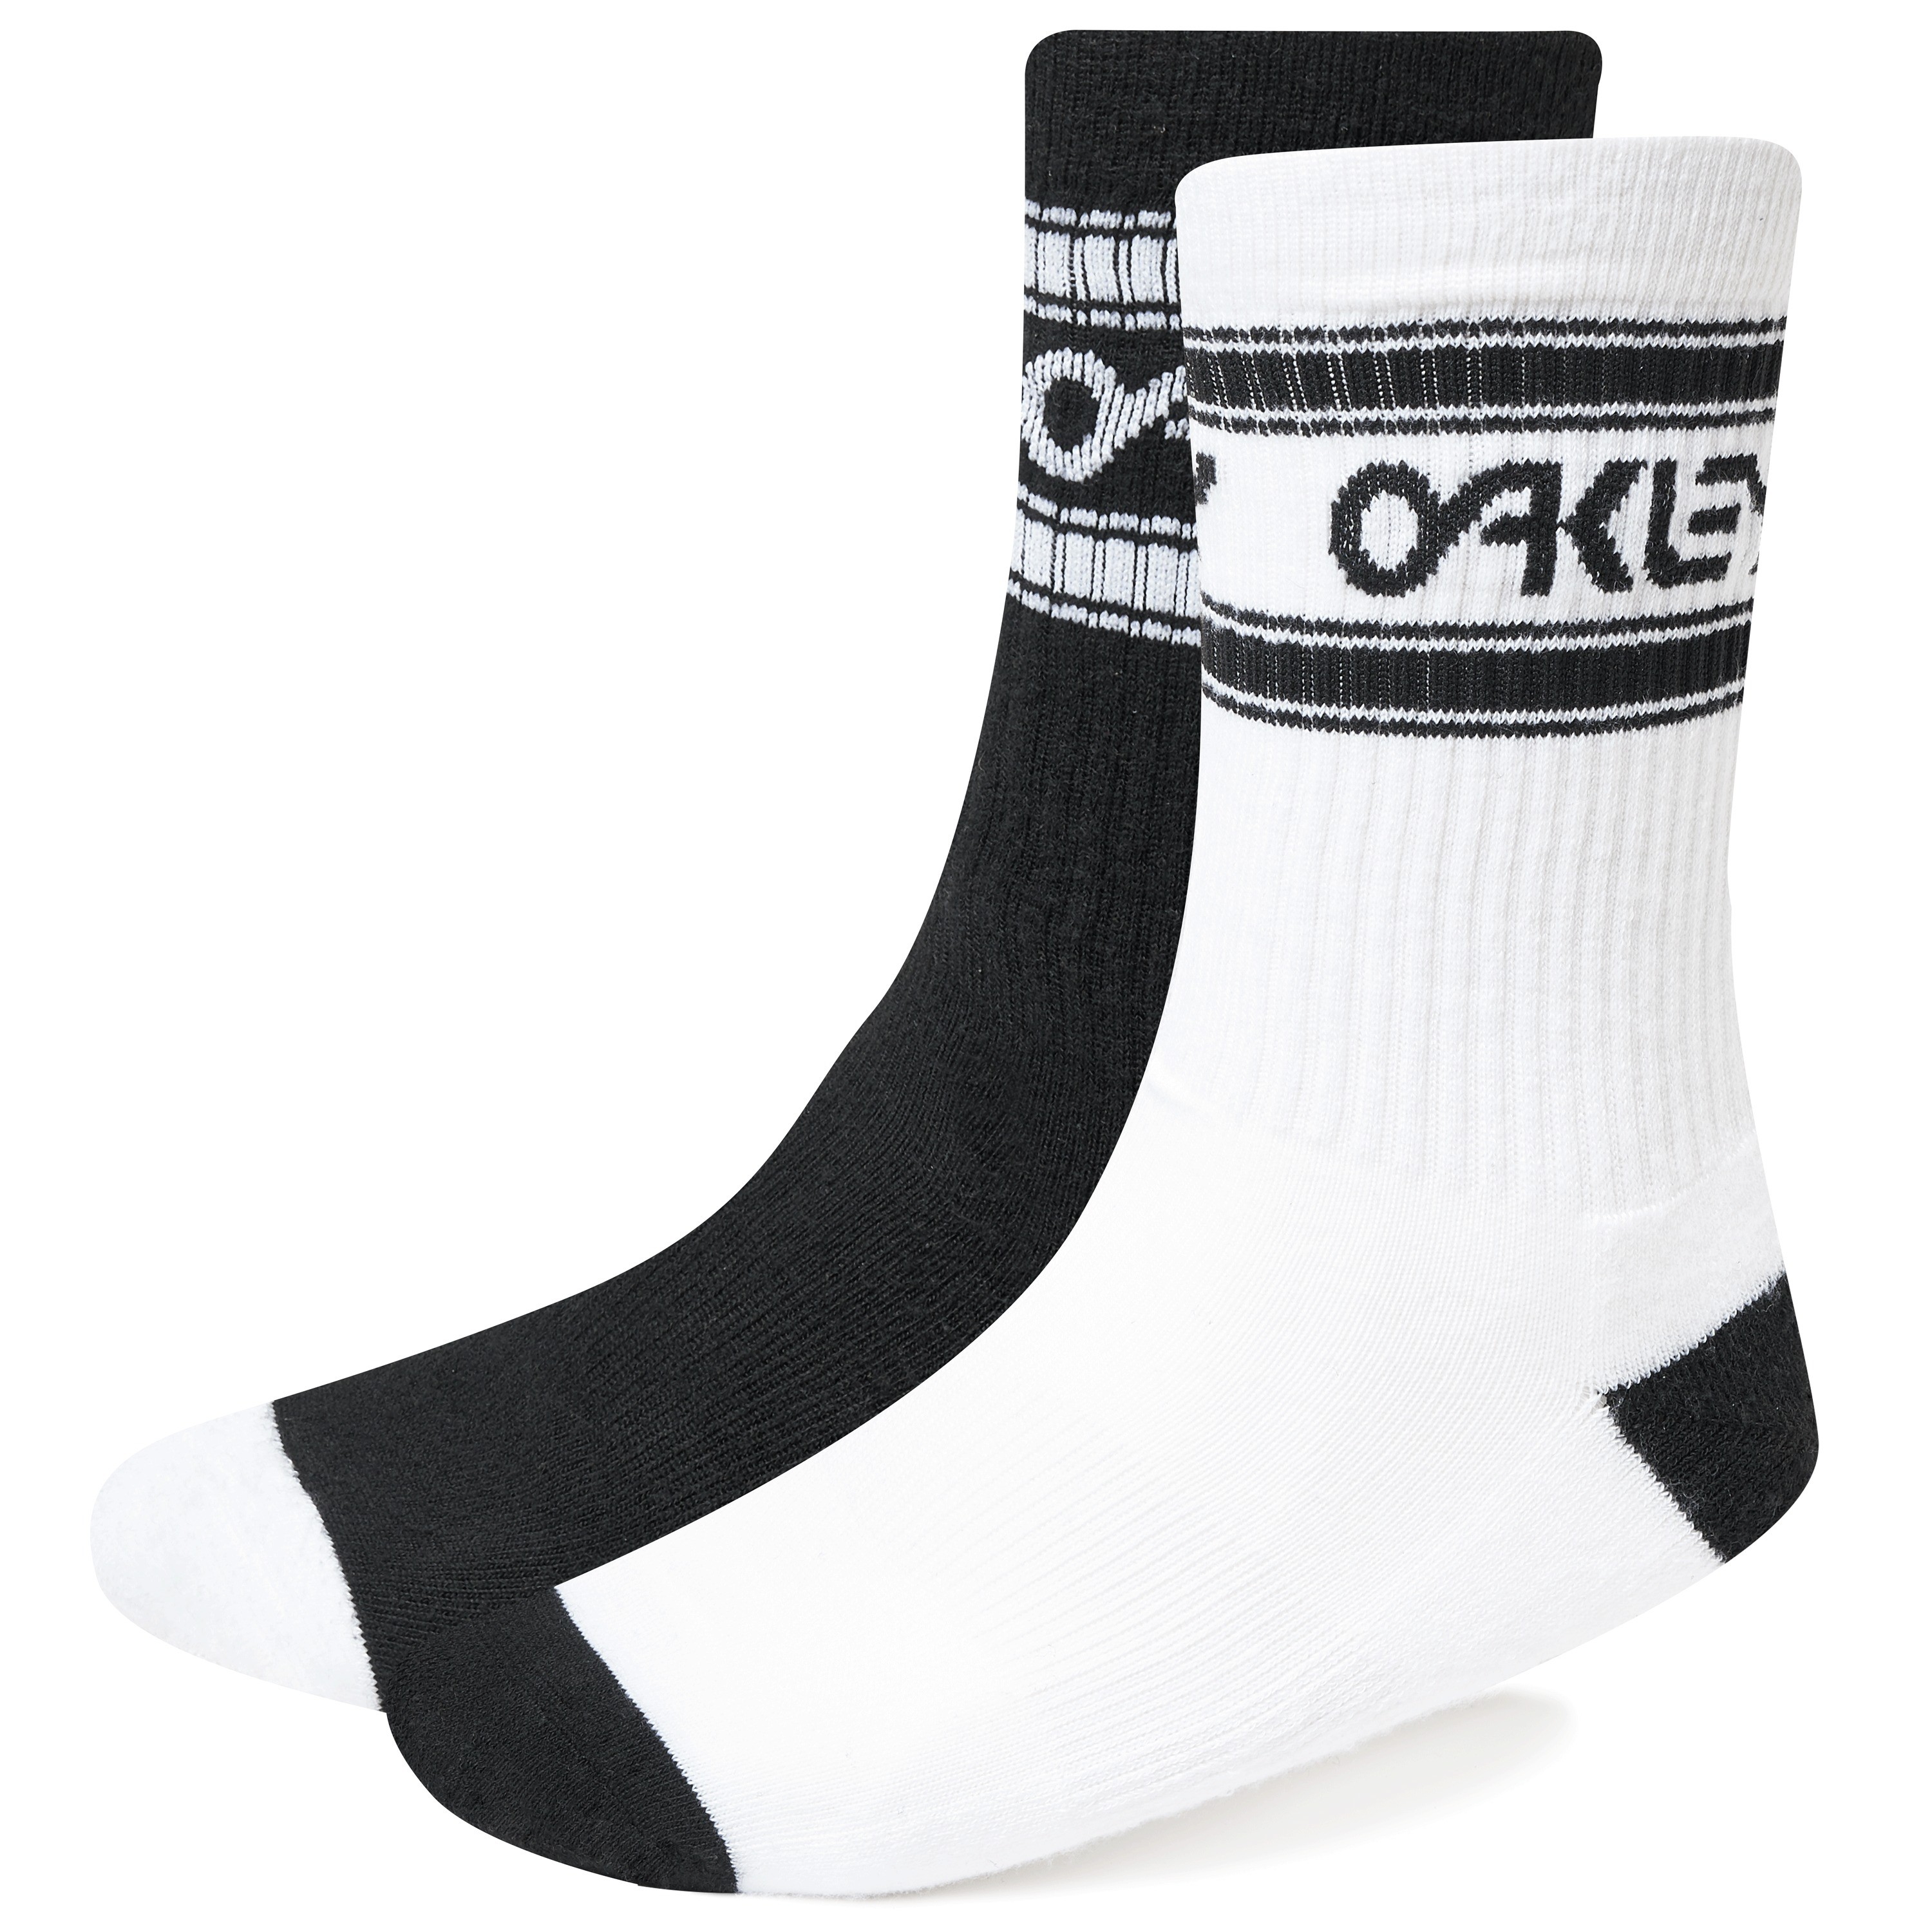 Oakley B1B chaussettes de cyclisme blackout noir blanc 2-pack